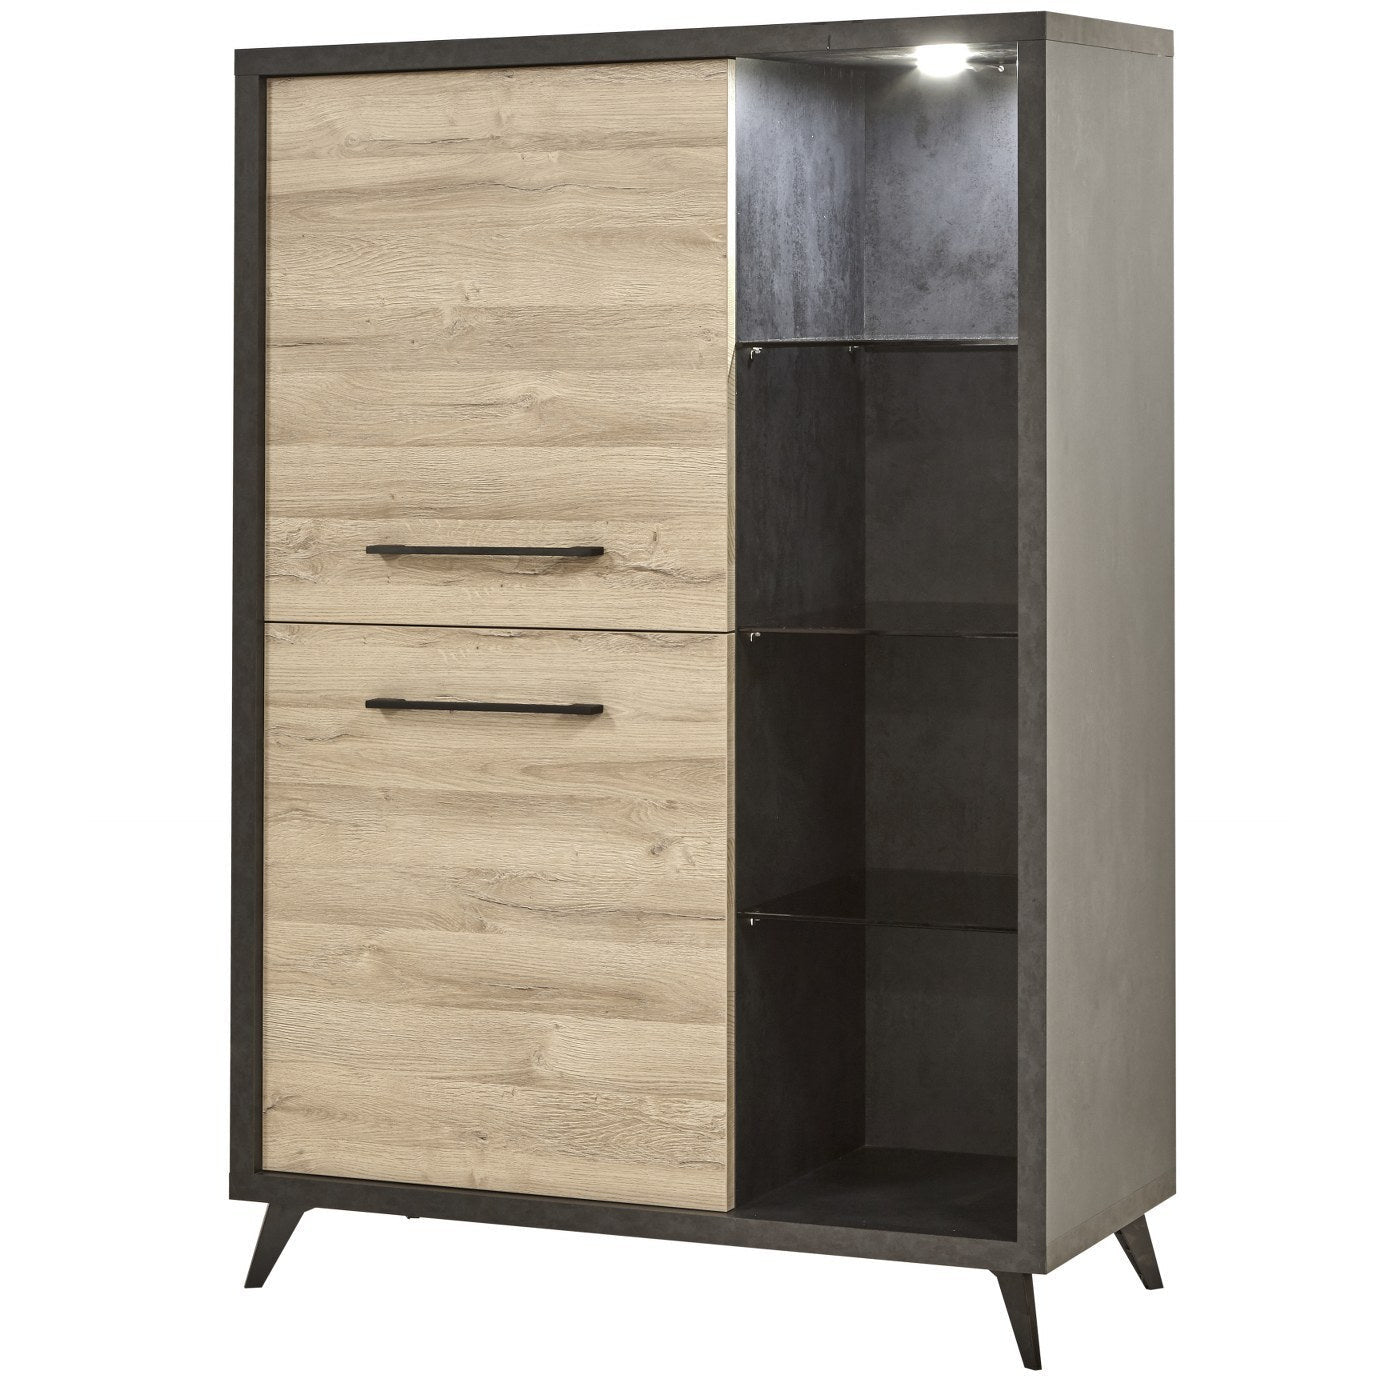 Wall cabinet | Furniture series Moulin | Natural, black | 110x50x